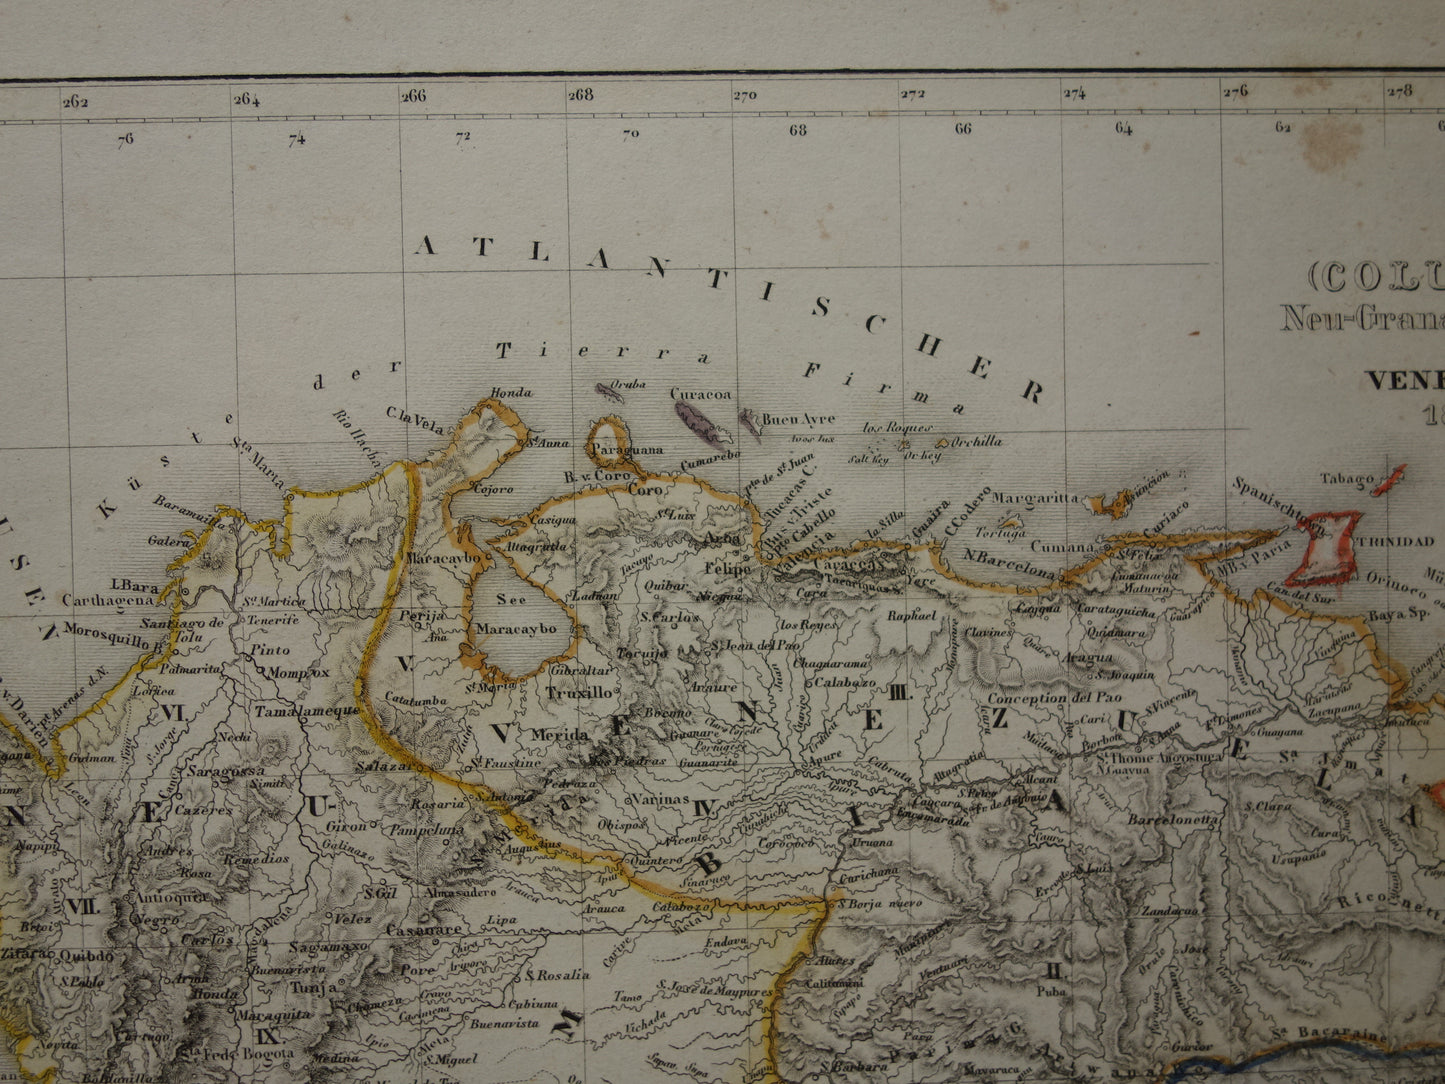 COLOMBIA Oude kaart van Ecuador Venezuela 175+ jaar oude handgekleurde landkaart Zuid-Amerika Andes gebergte